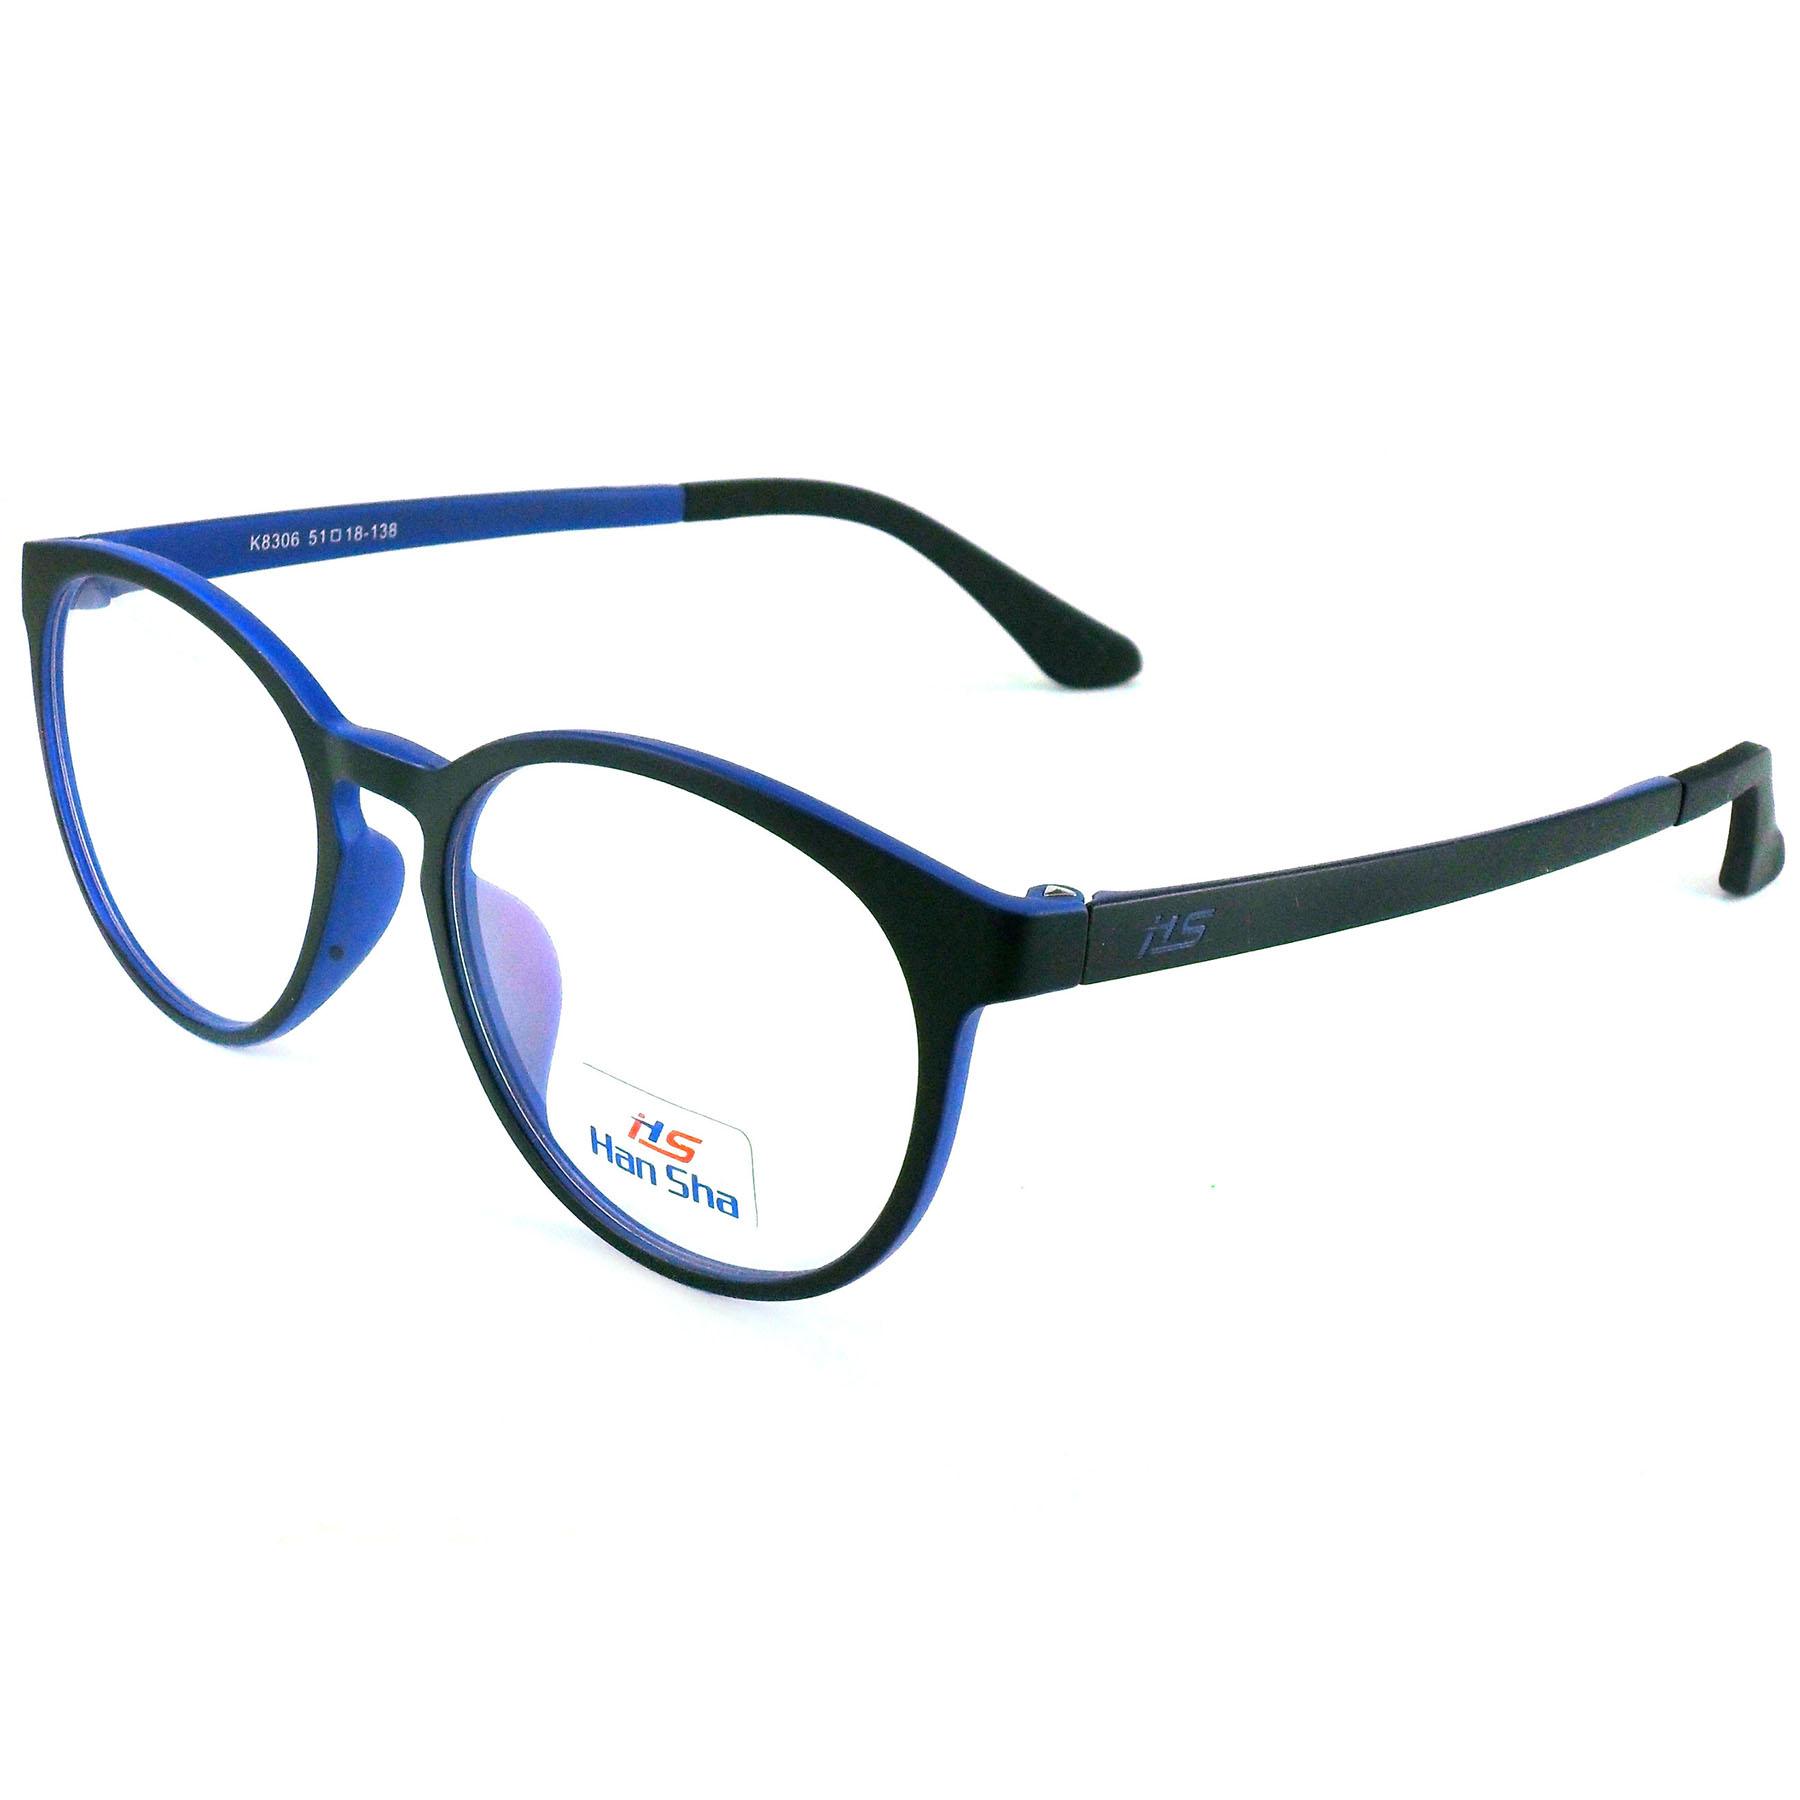 Korea แว่นตา รุ่น Han Sha K-8306 ทรงสปอร์ต วัสดุ TR-90 เบาและยืดหยุนได้สูง ขาข้อต่อ ( สำหรับตัดเลนส์ ) กรอบแว่นตา แว่นสายตา แฟชั่น Eyewear Top Glasses